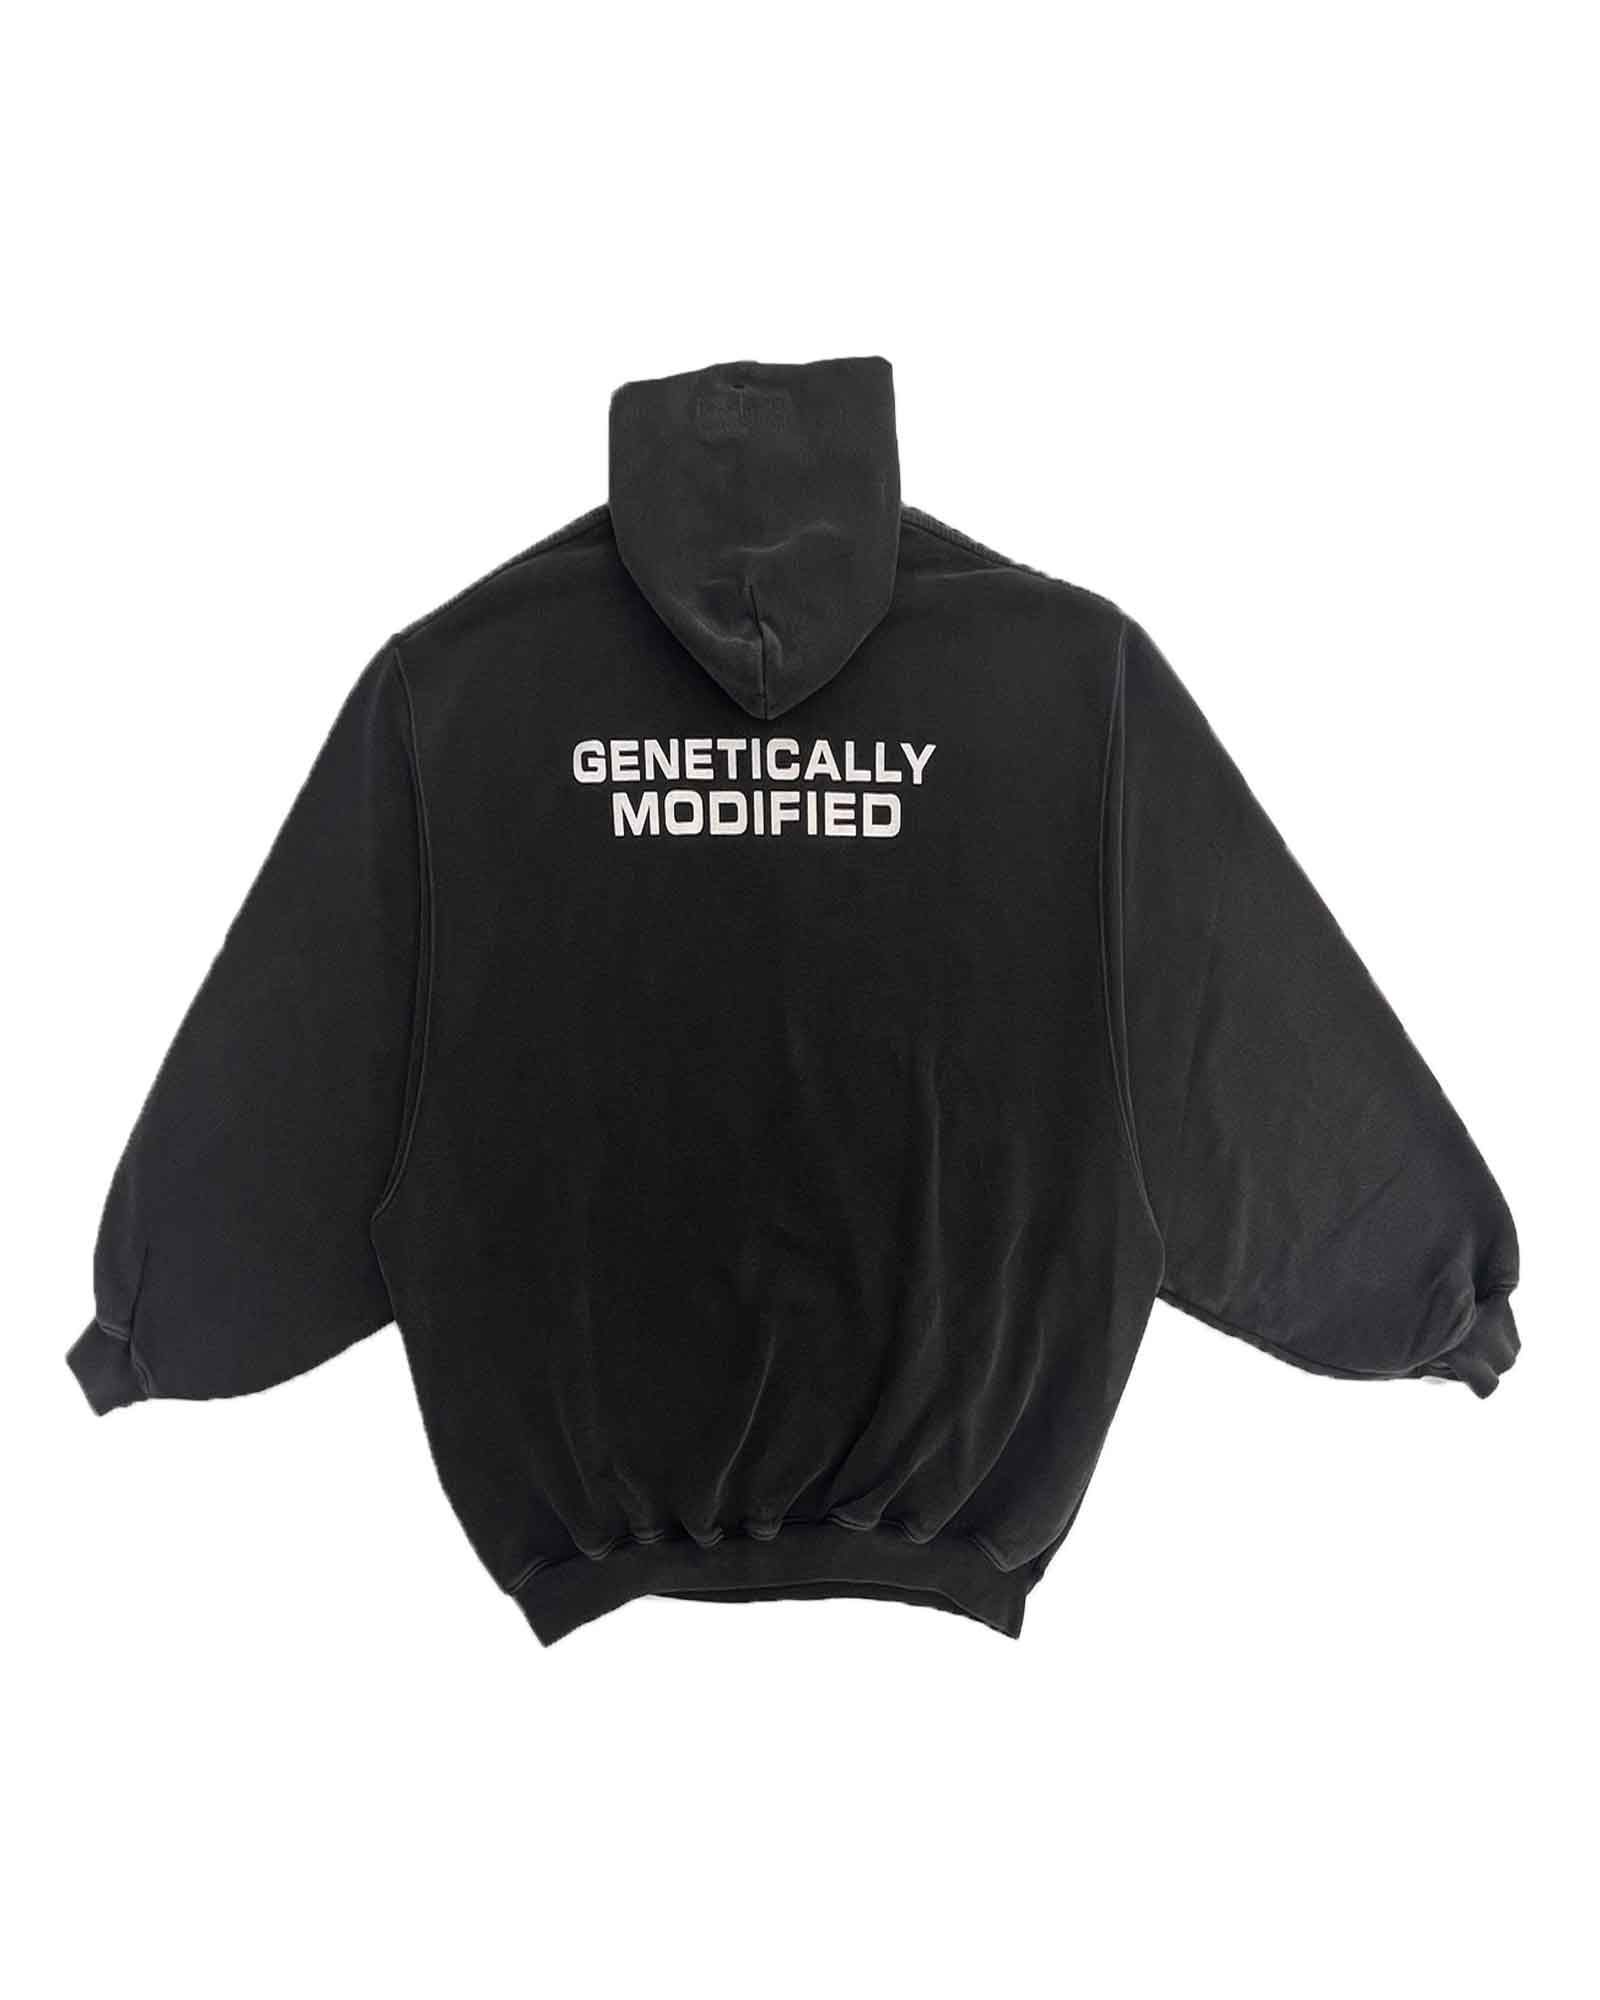 VETEMENTS - Genetically modified hoodie (プルオーバーパーカー